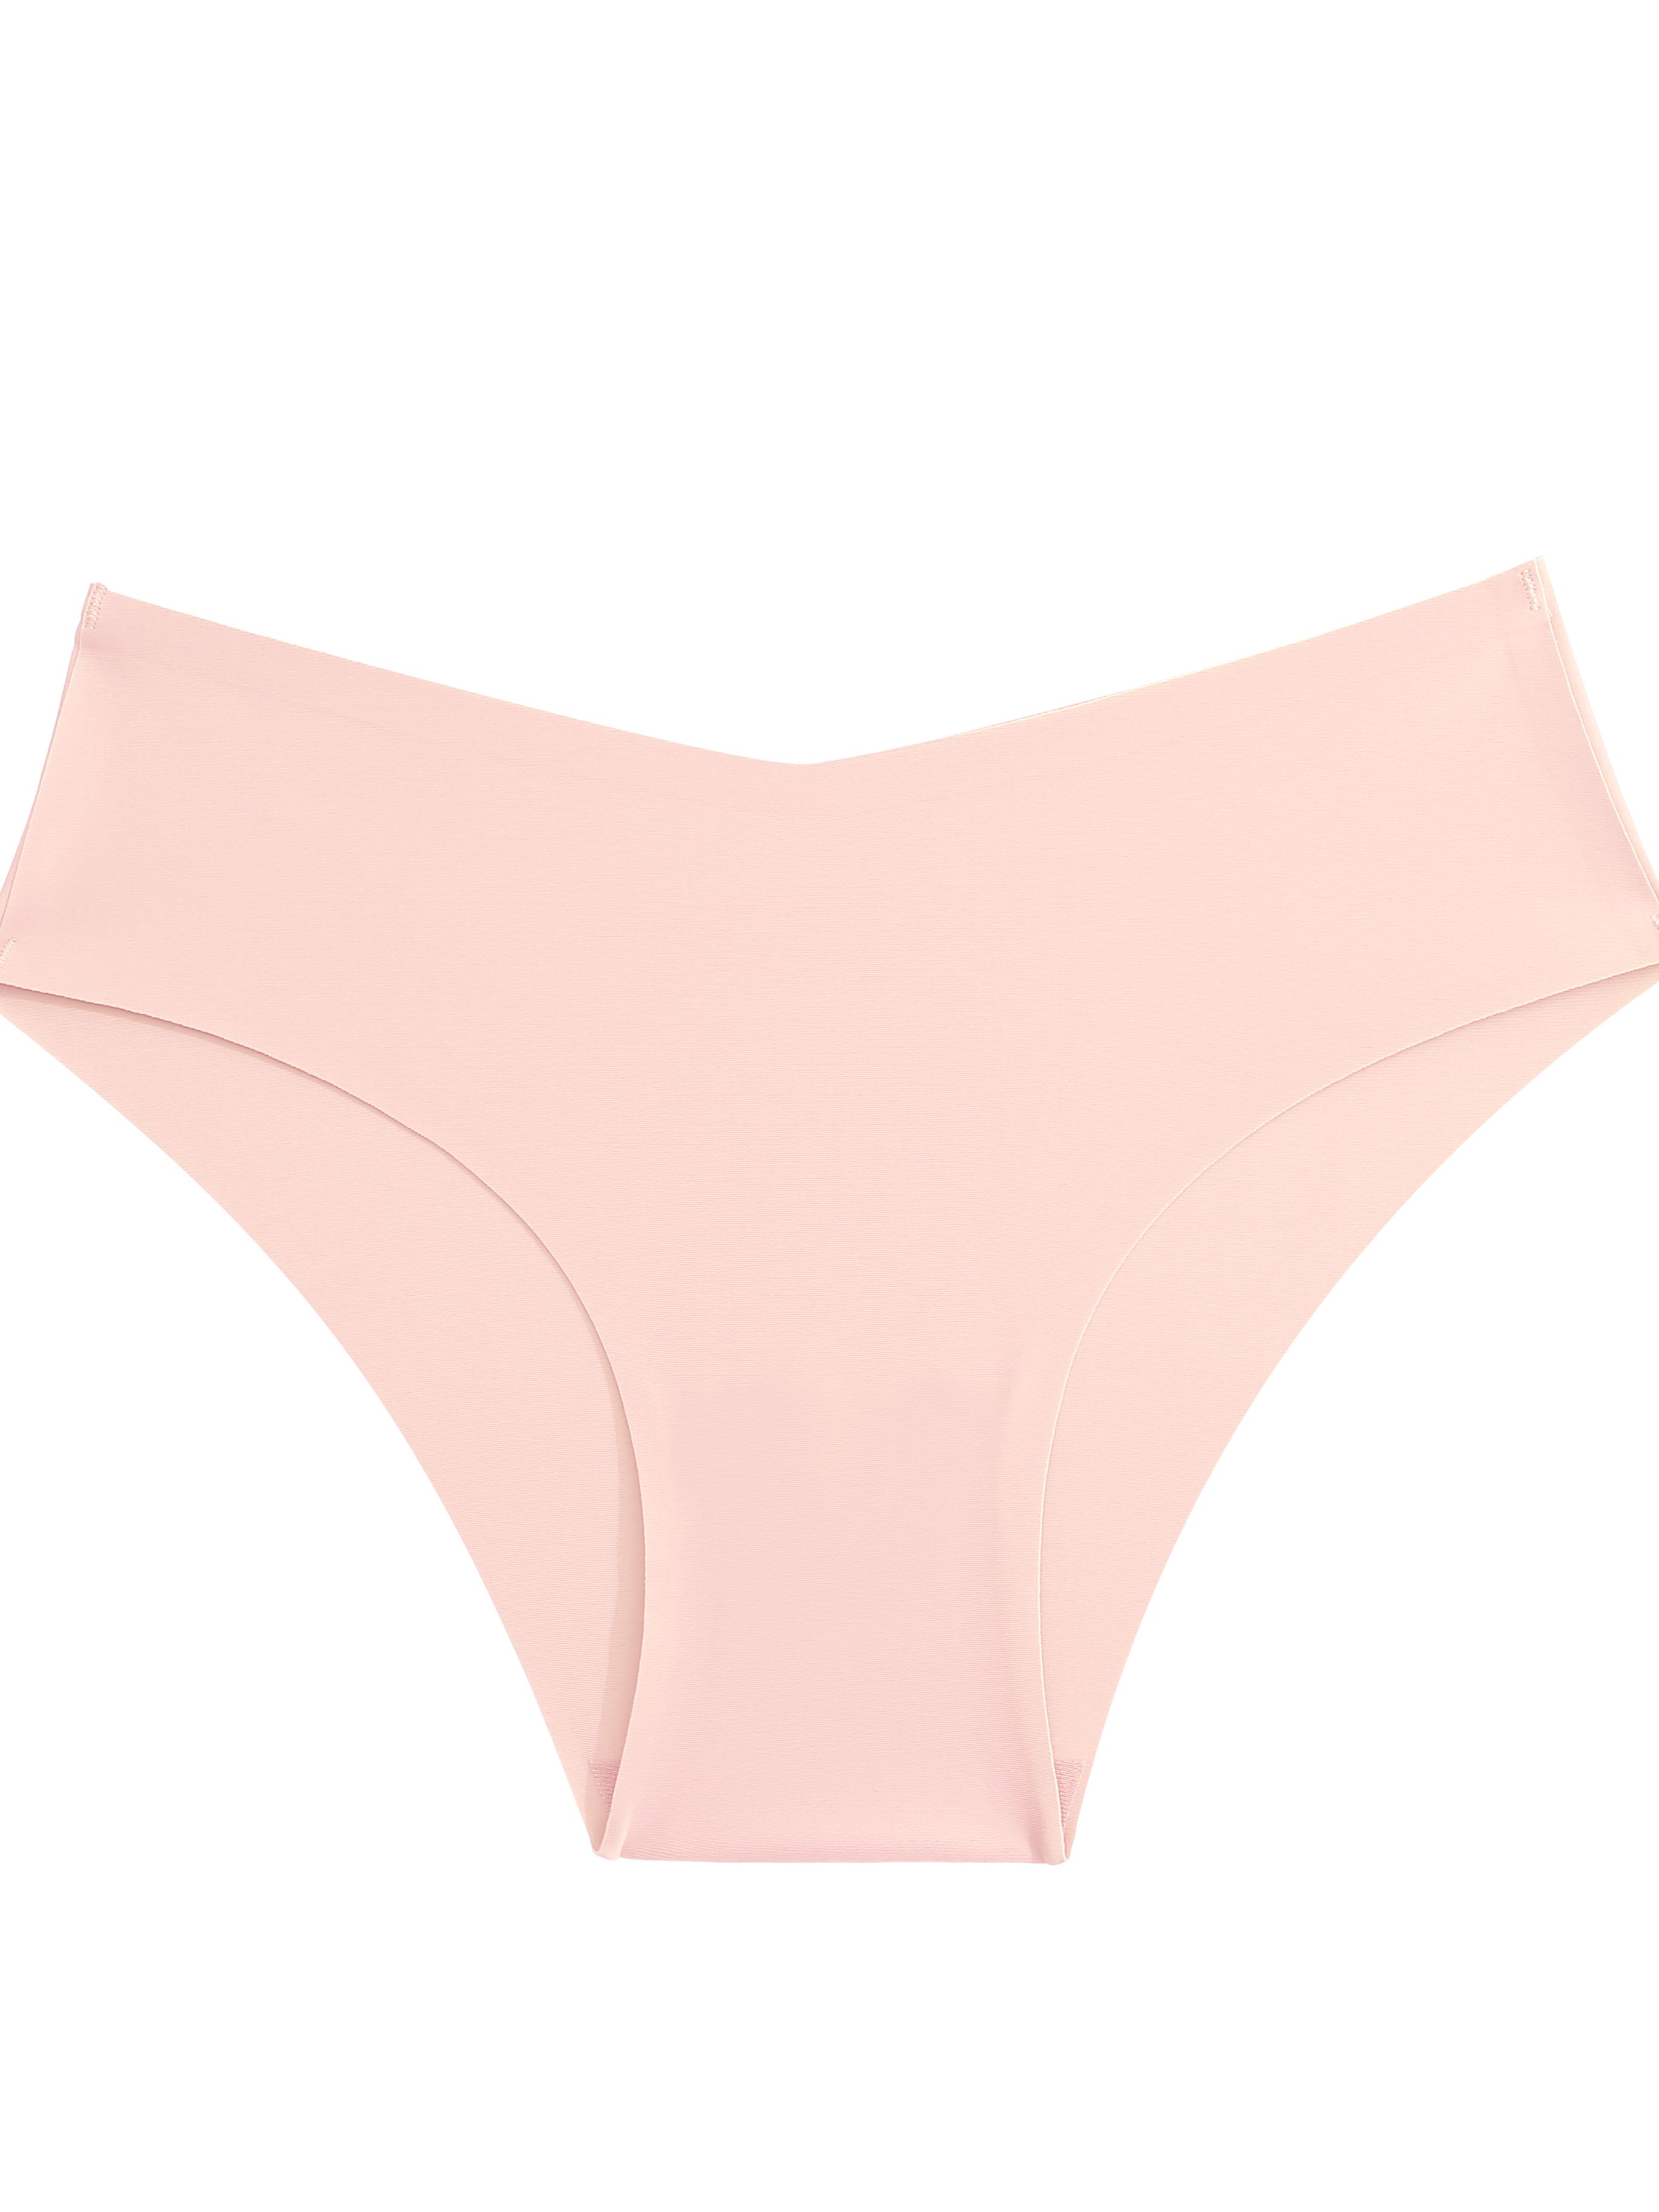 Plain seamless mid waist cotton panties